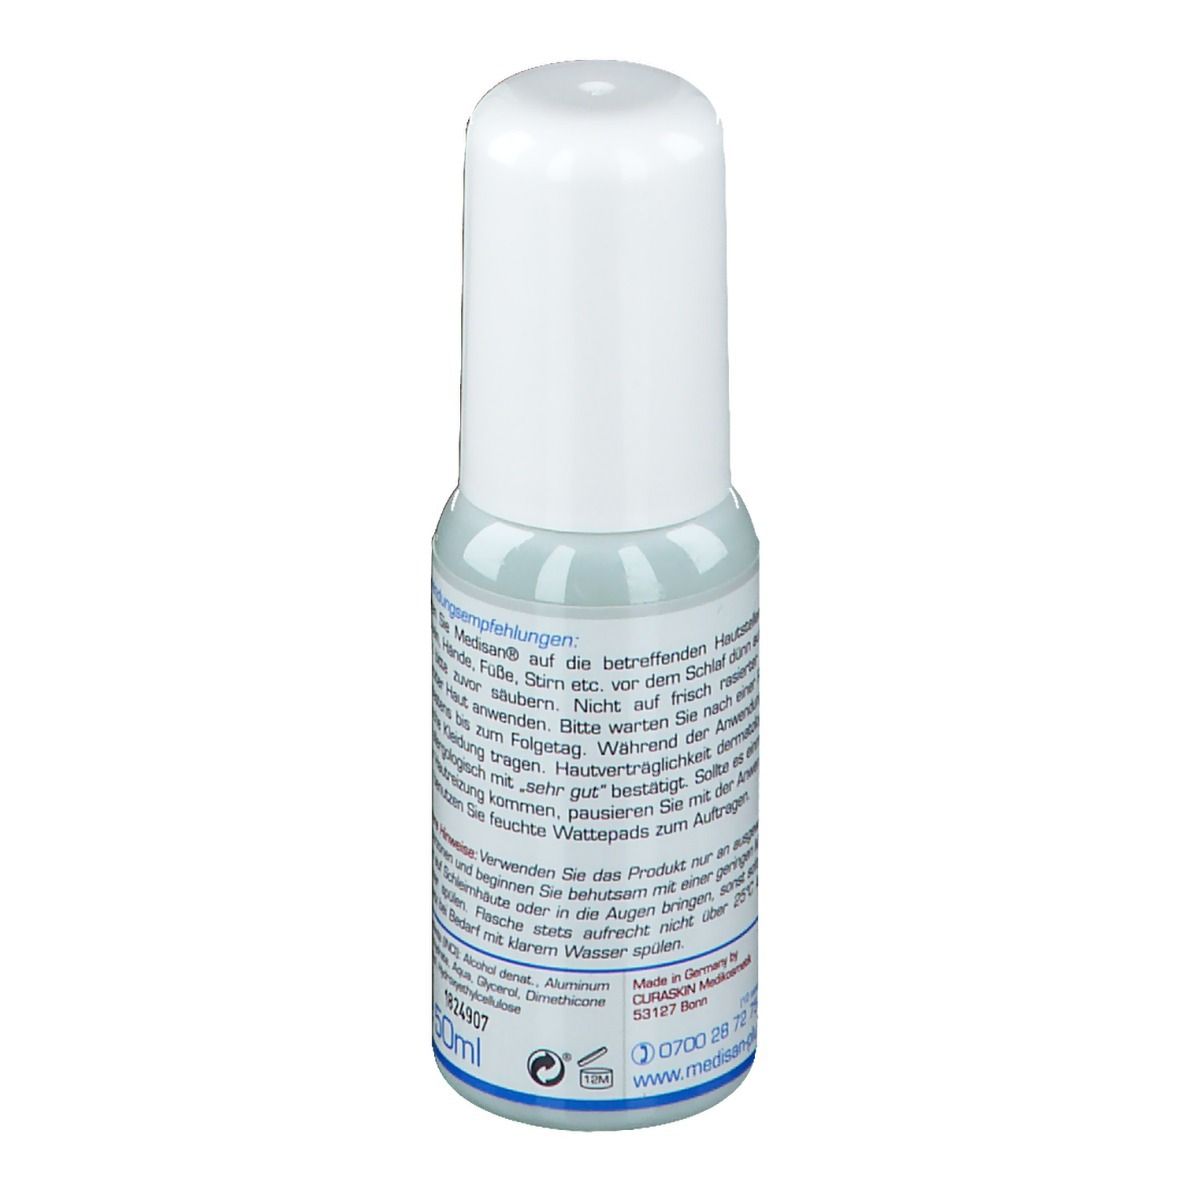 Medisan® Plus Antitranspirant Pumpspray